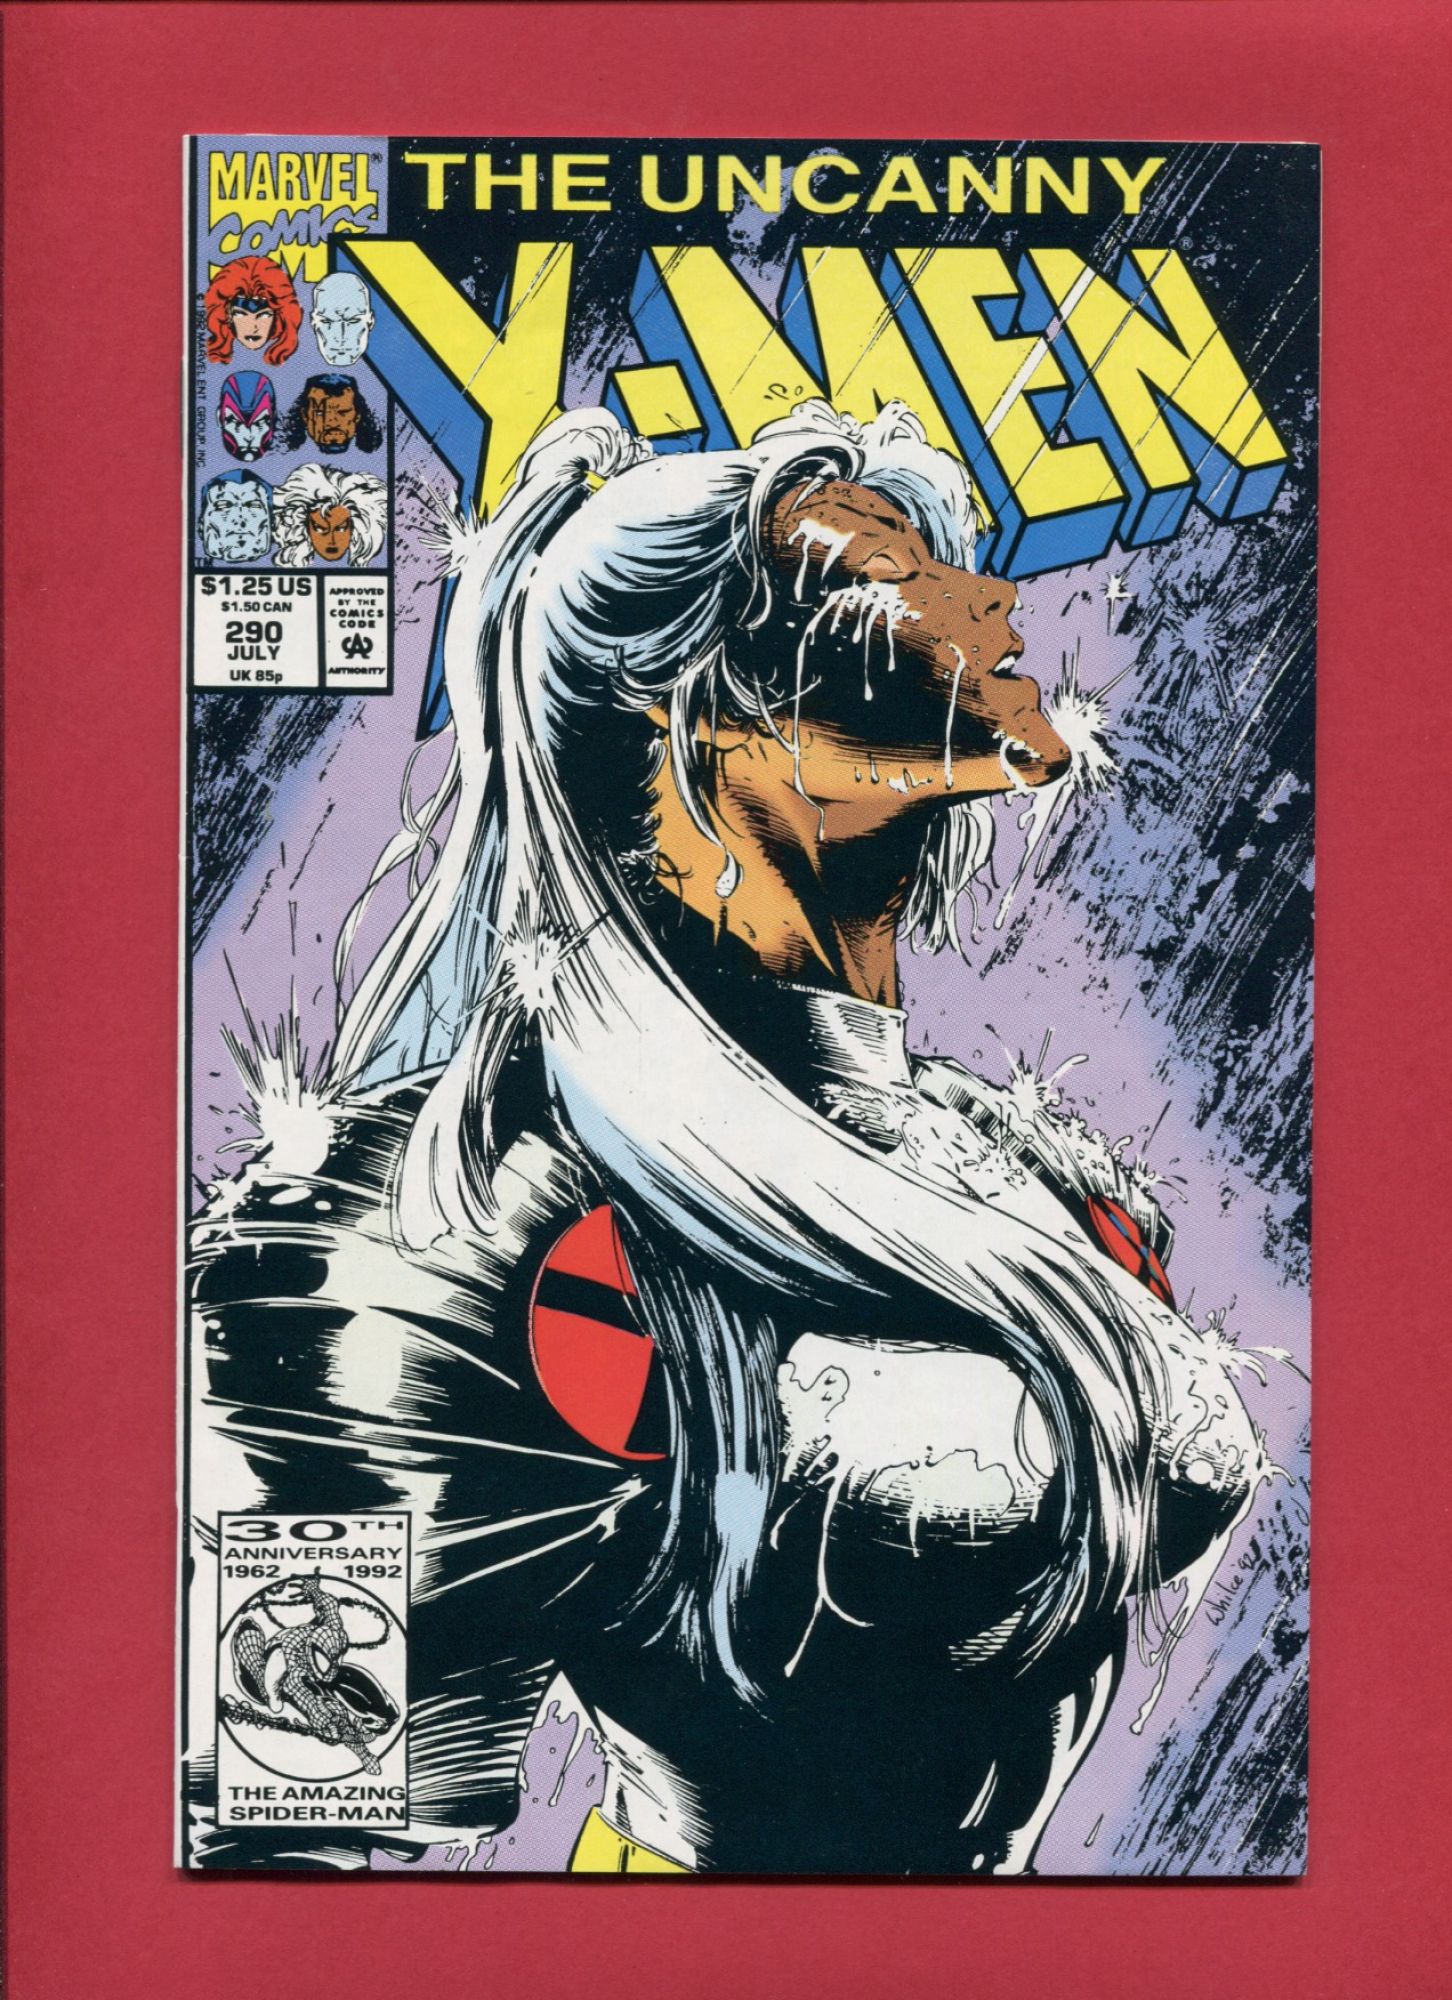 Uncanny X-Men #290, Jul 1992, 9.2 NM-